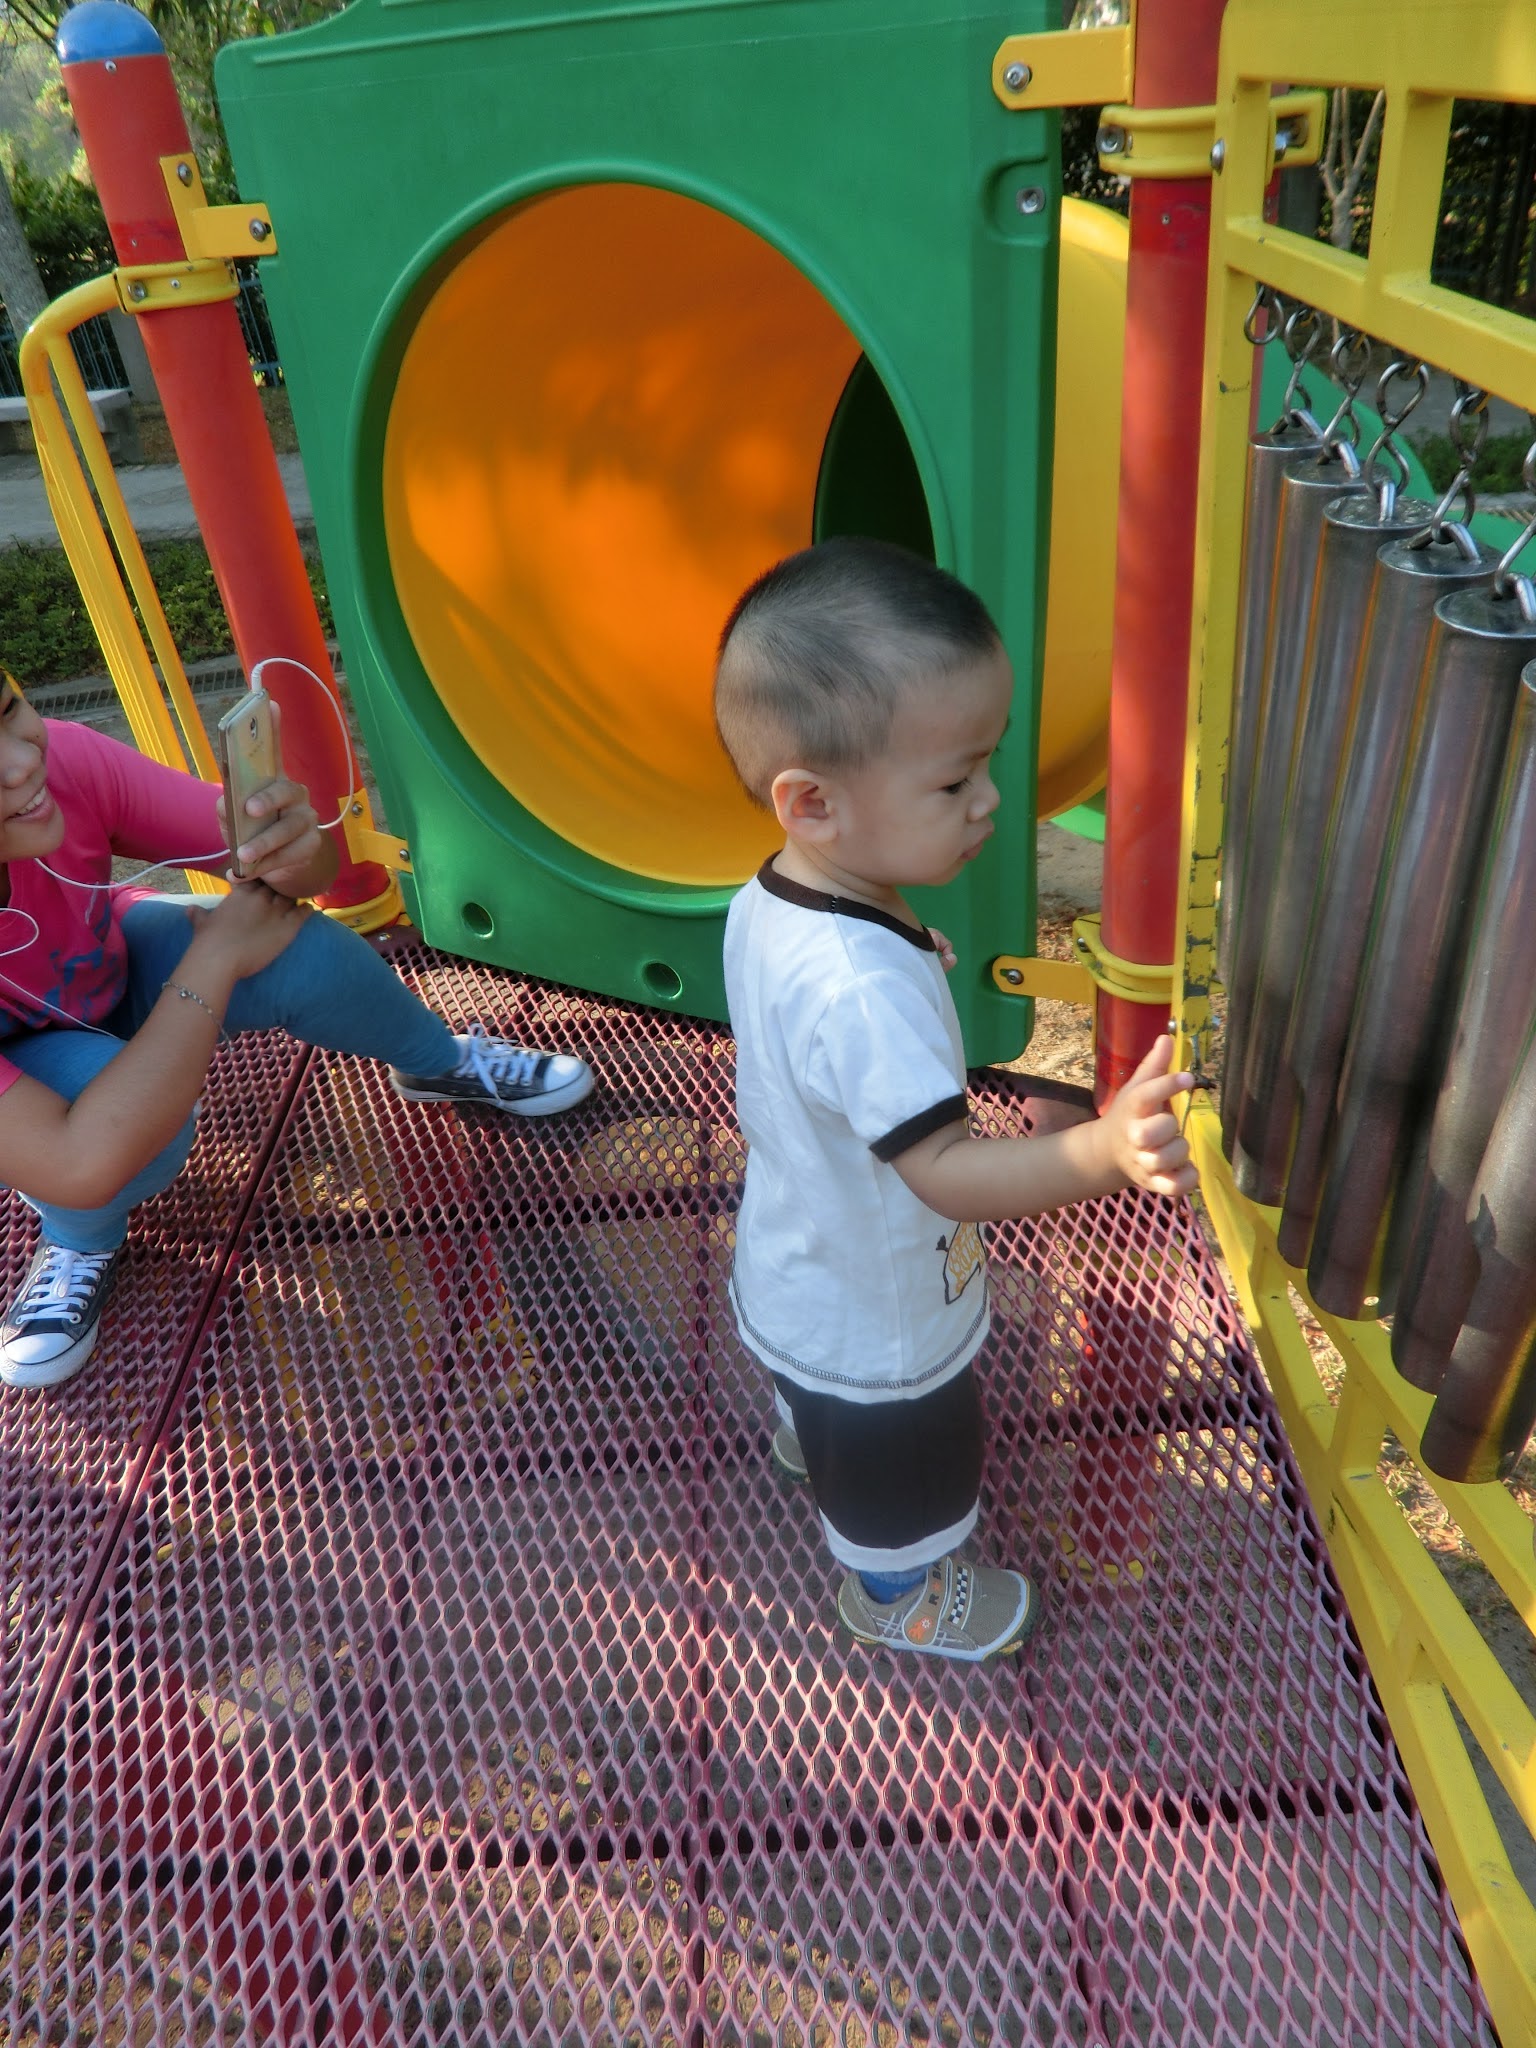 playground for kids